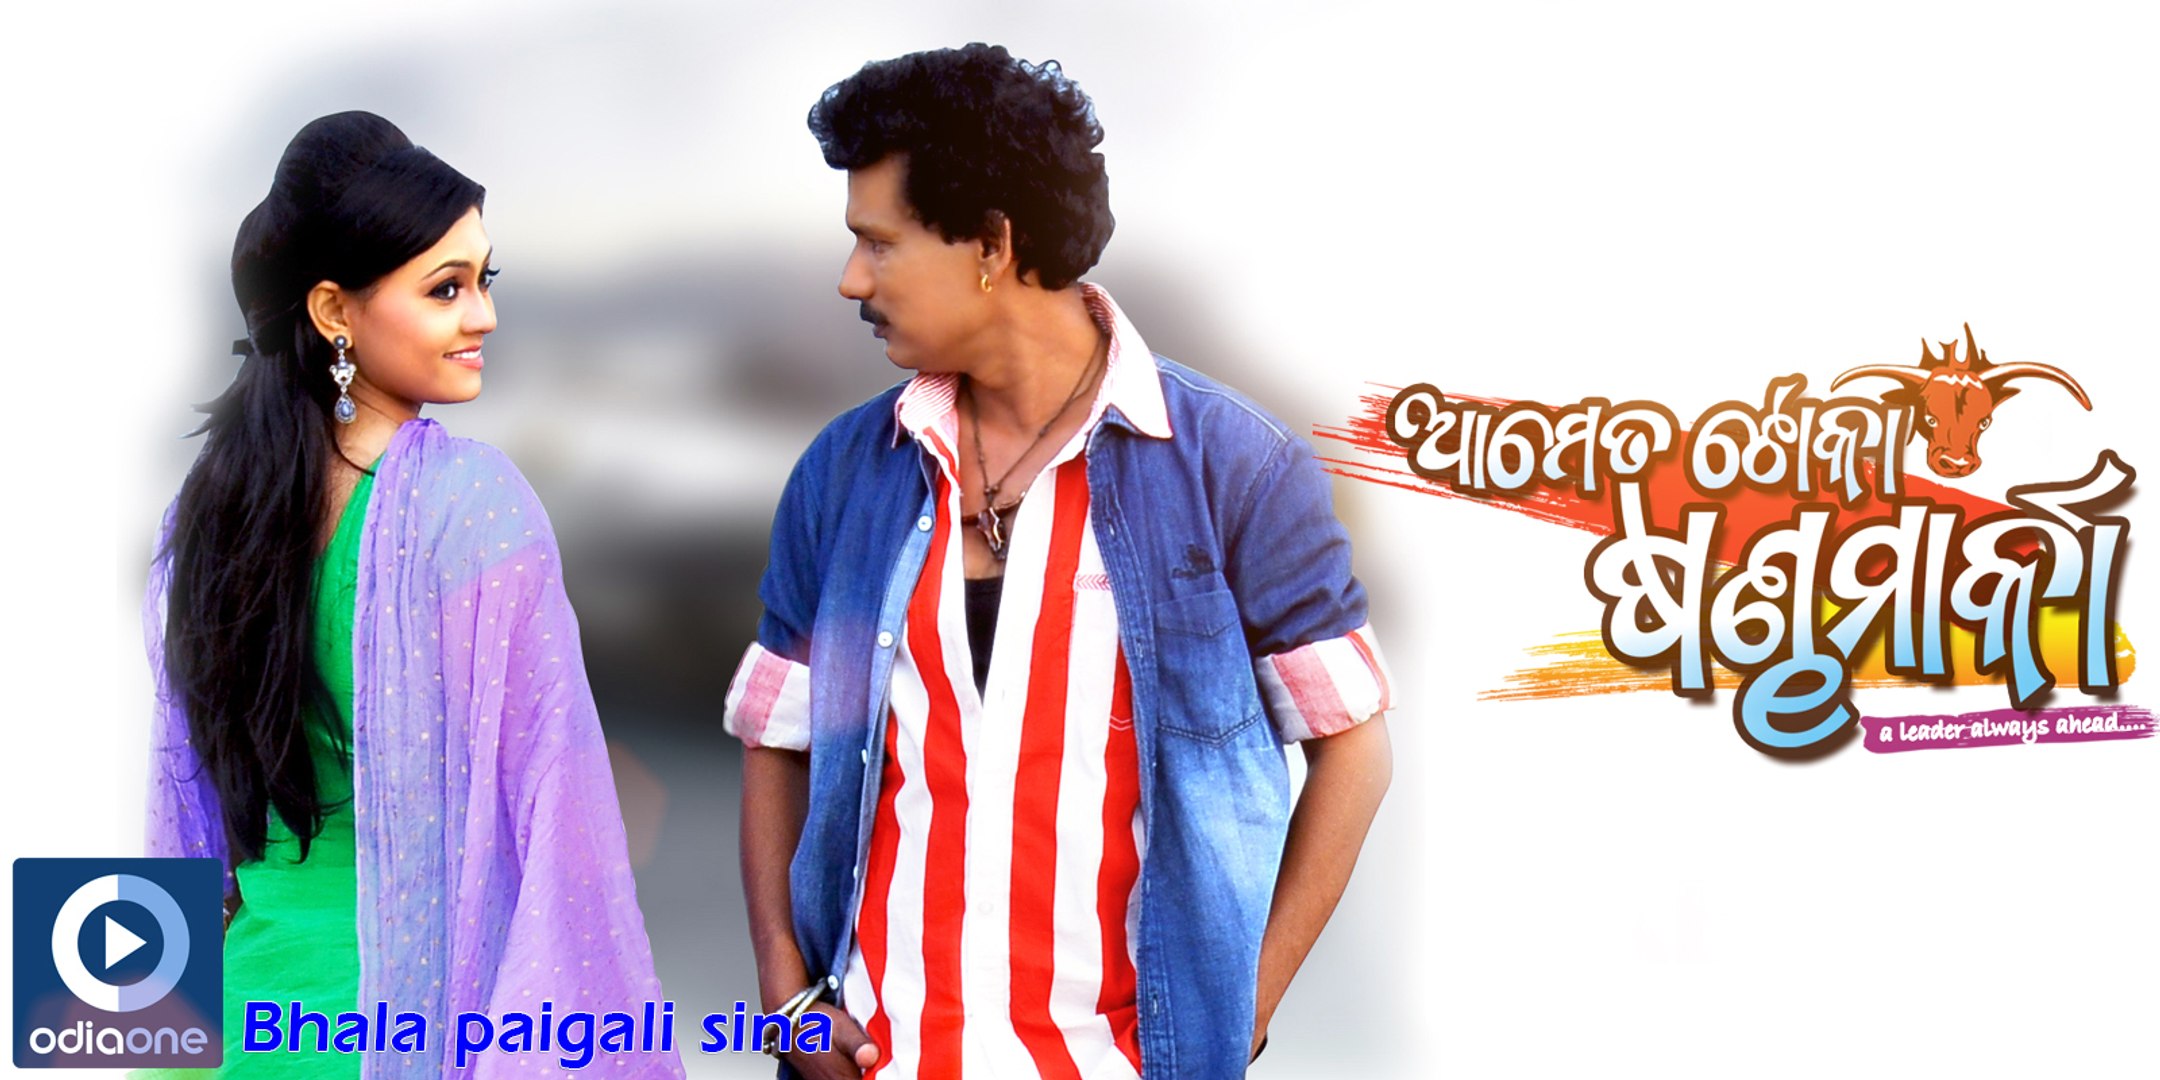 Latest Odia Movie | Aame Ta Toka Sandha Marka | Bhala Pai Gali Sina Full HD  Video | Odiaone - video Dailymotion